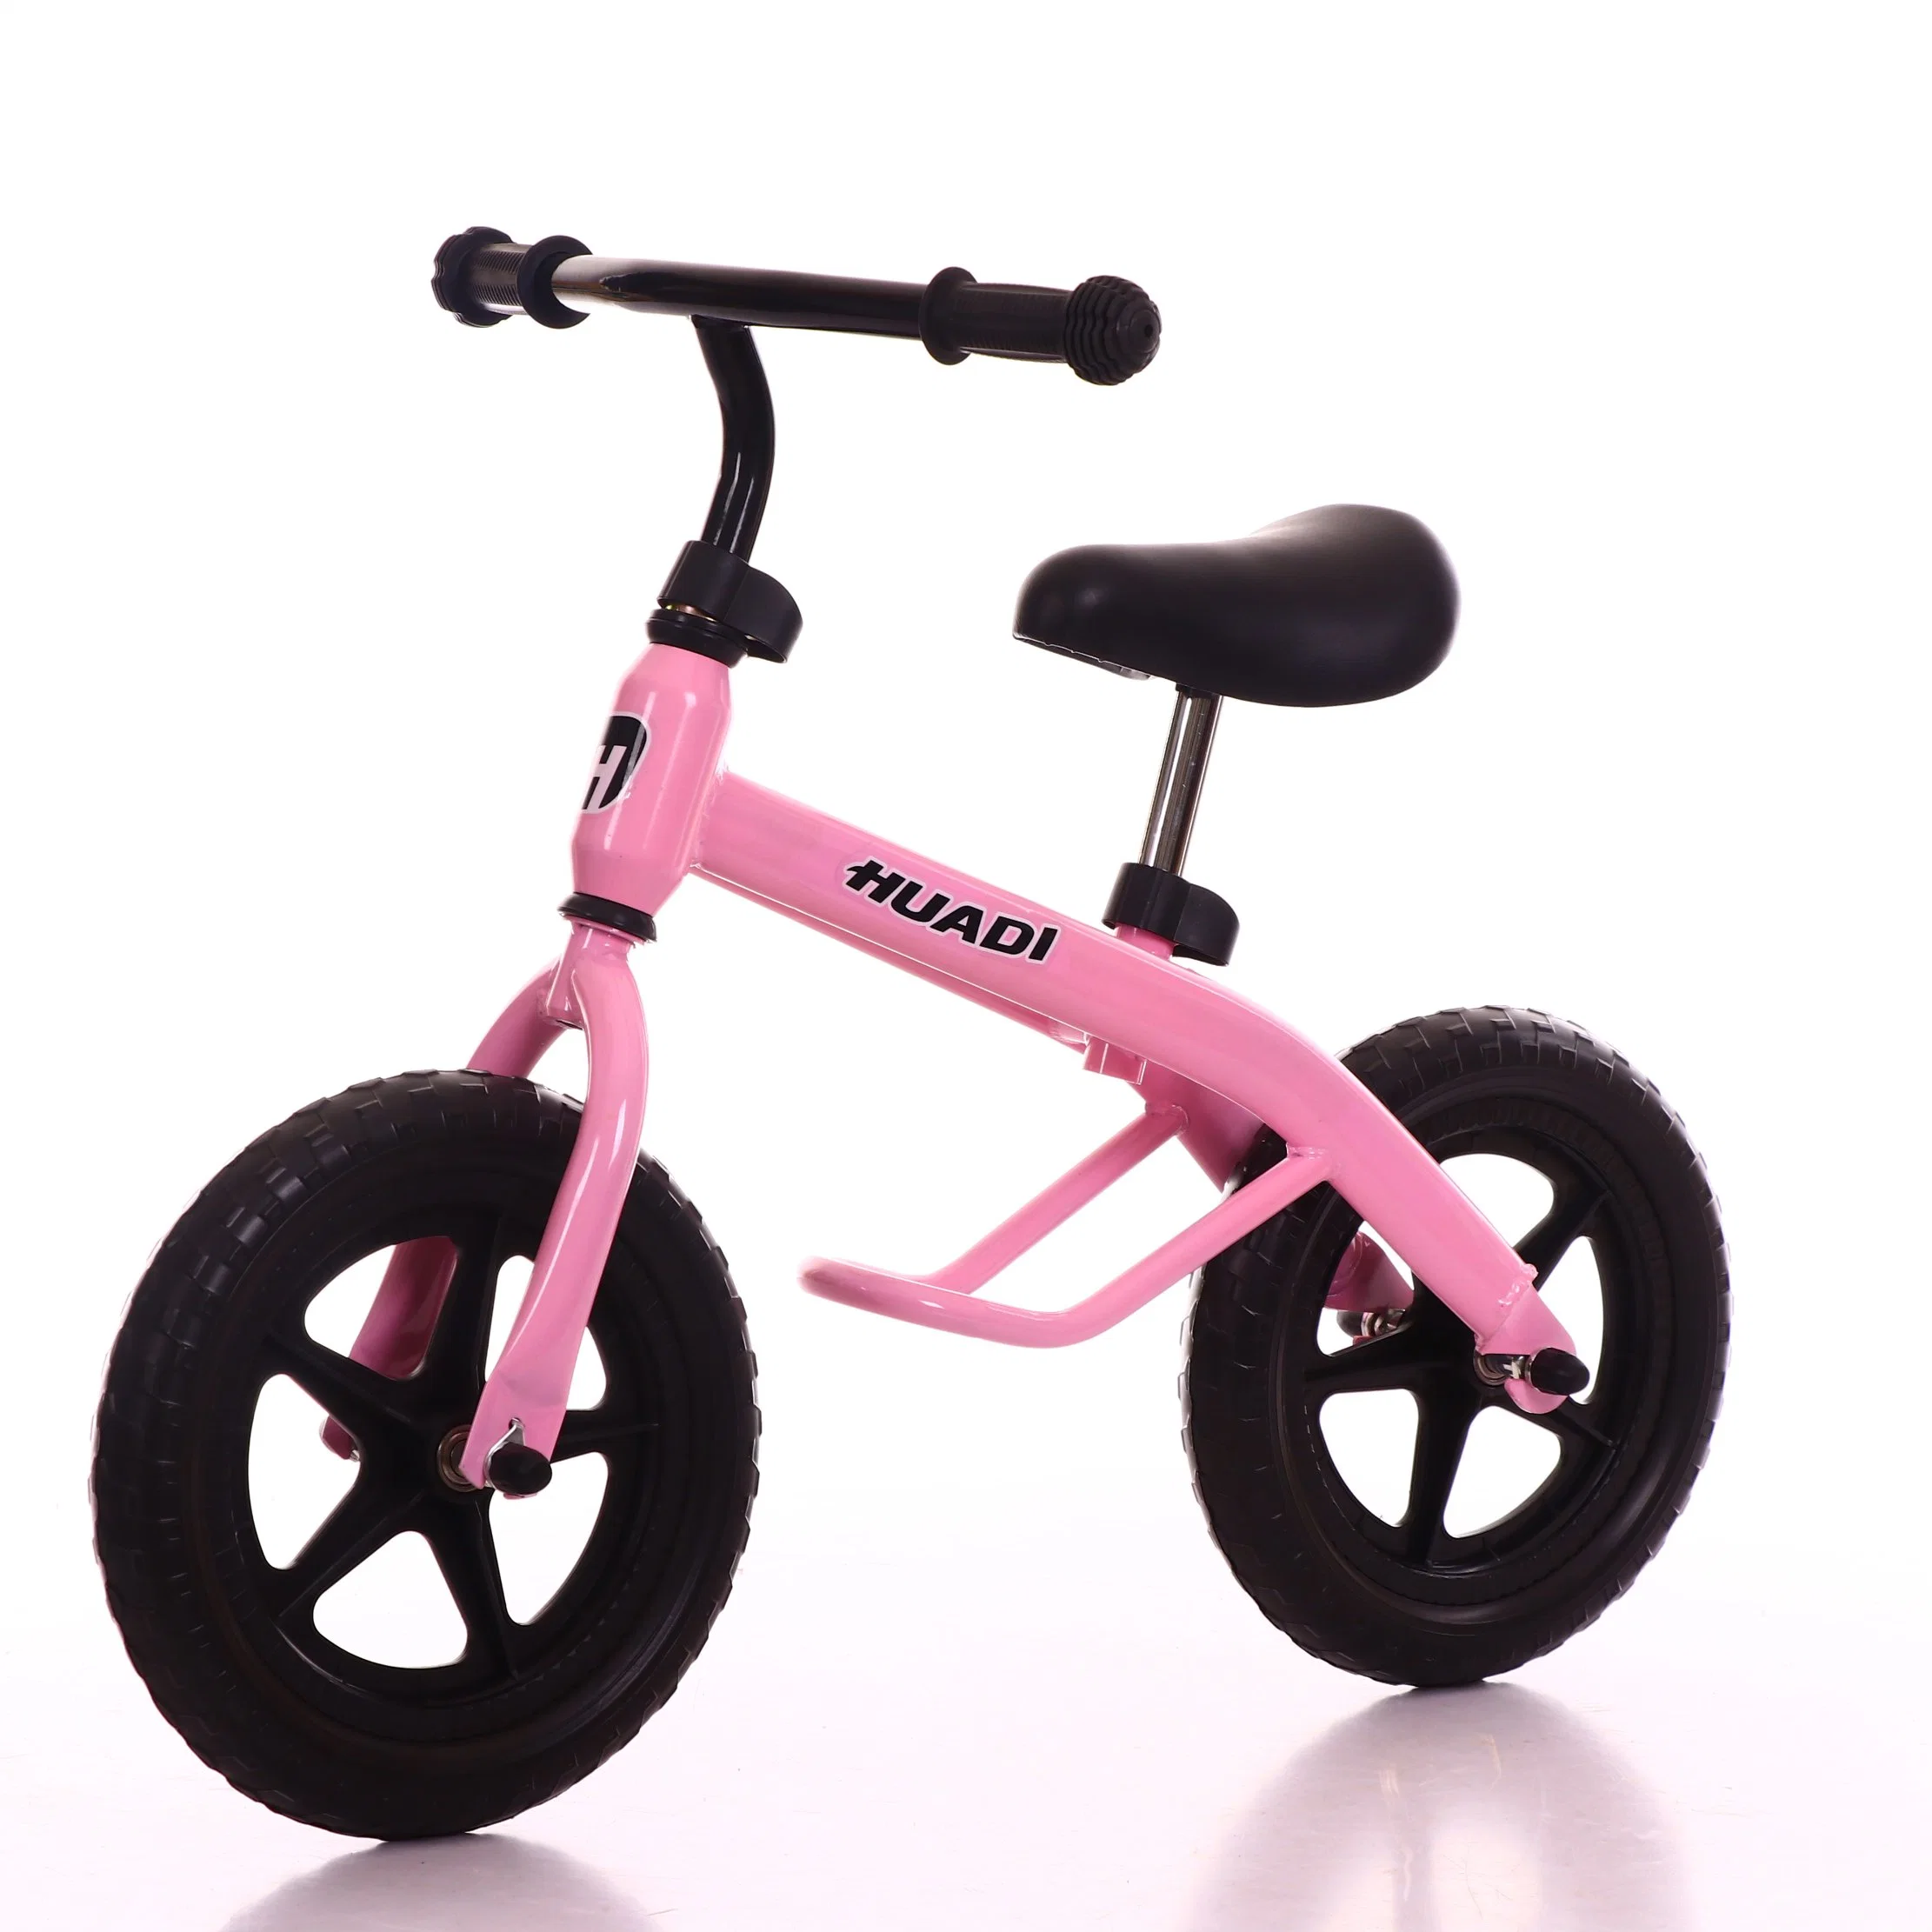 Kinder Laufrad Trainingsrad 12" Mini Spielzeug Baby Kleinkind Push Bike Kein Pedal